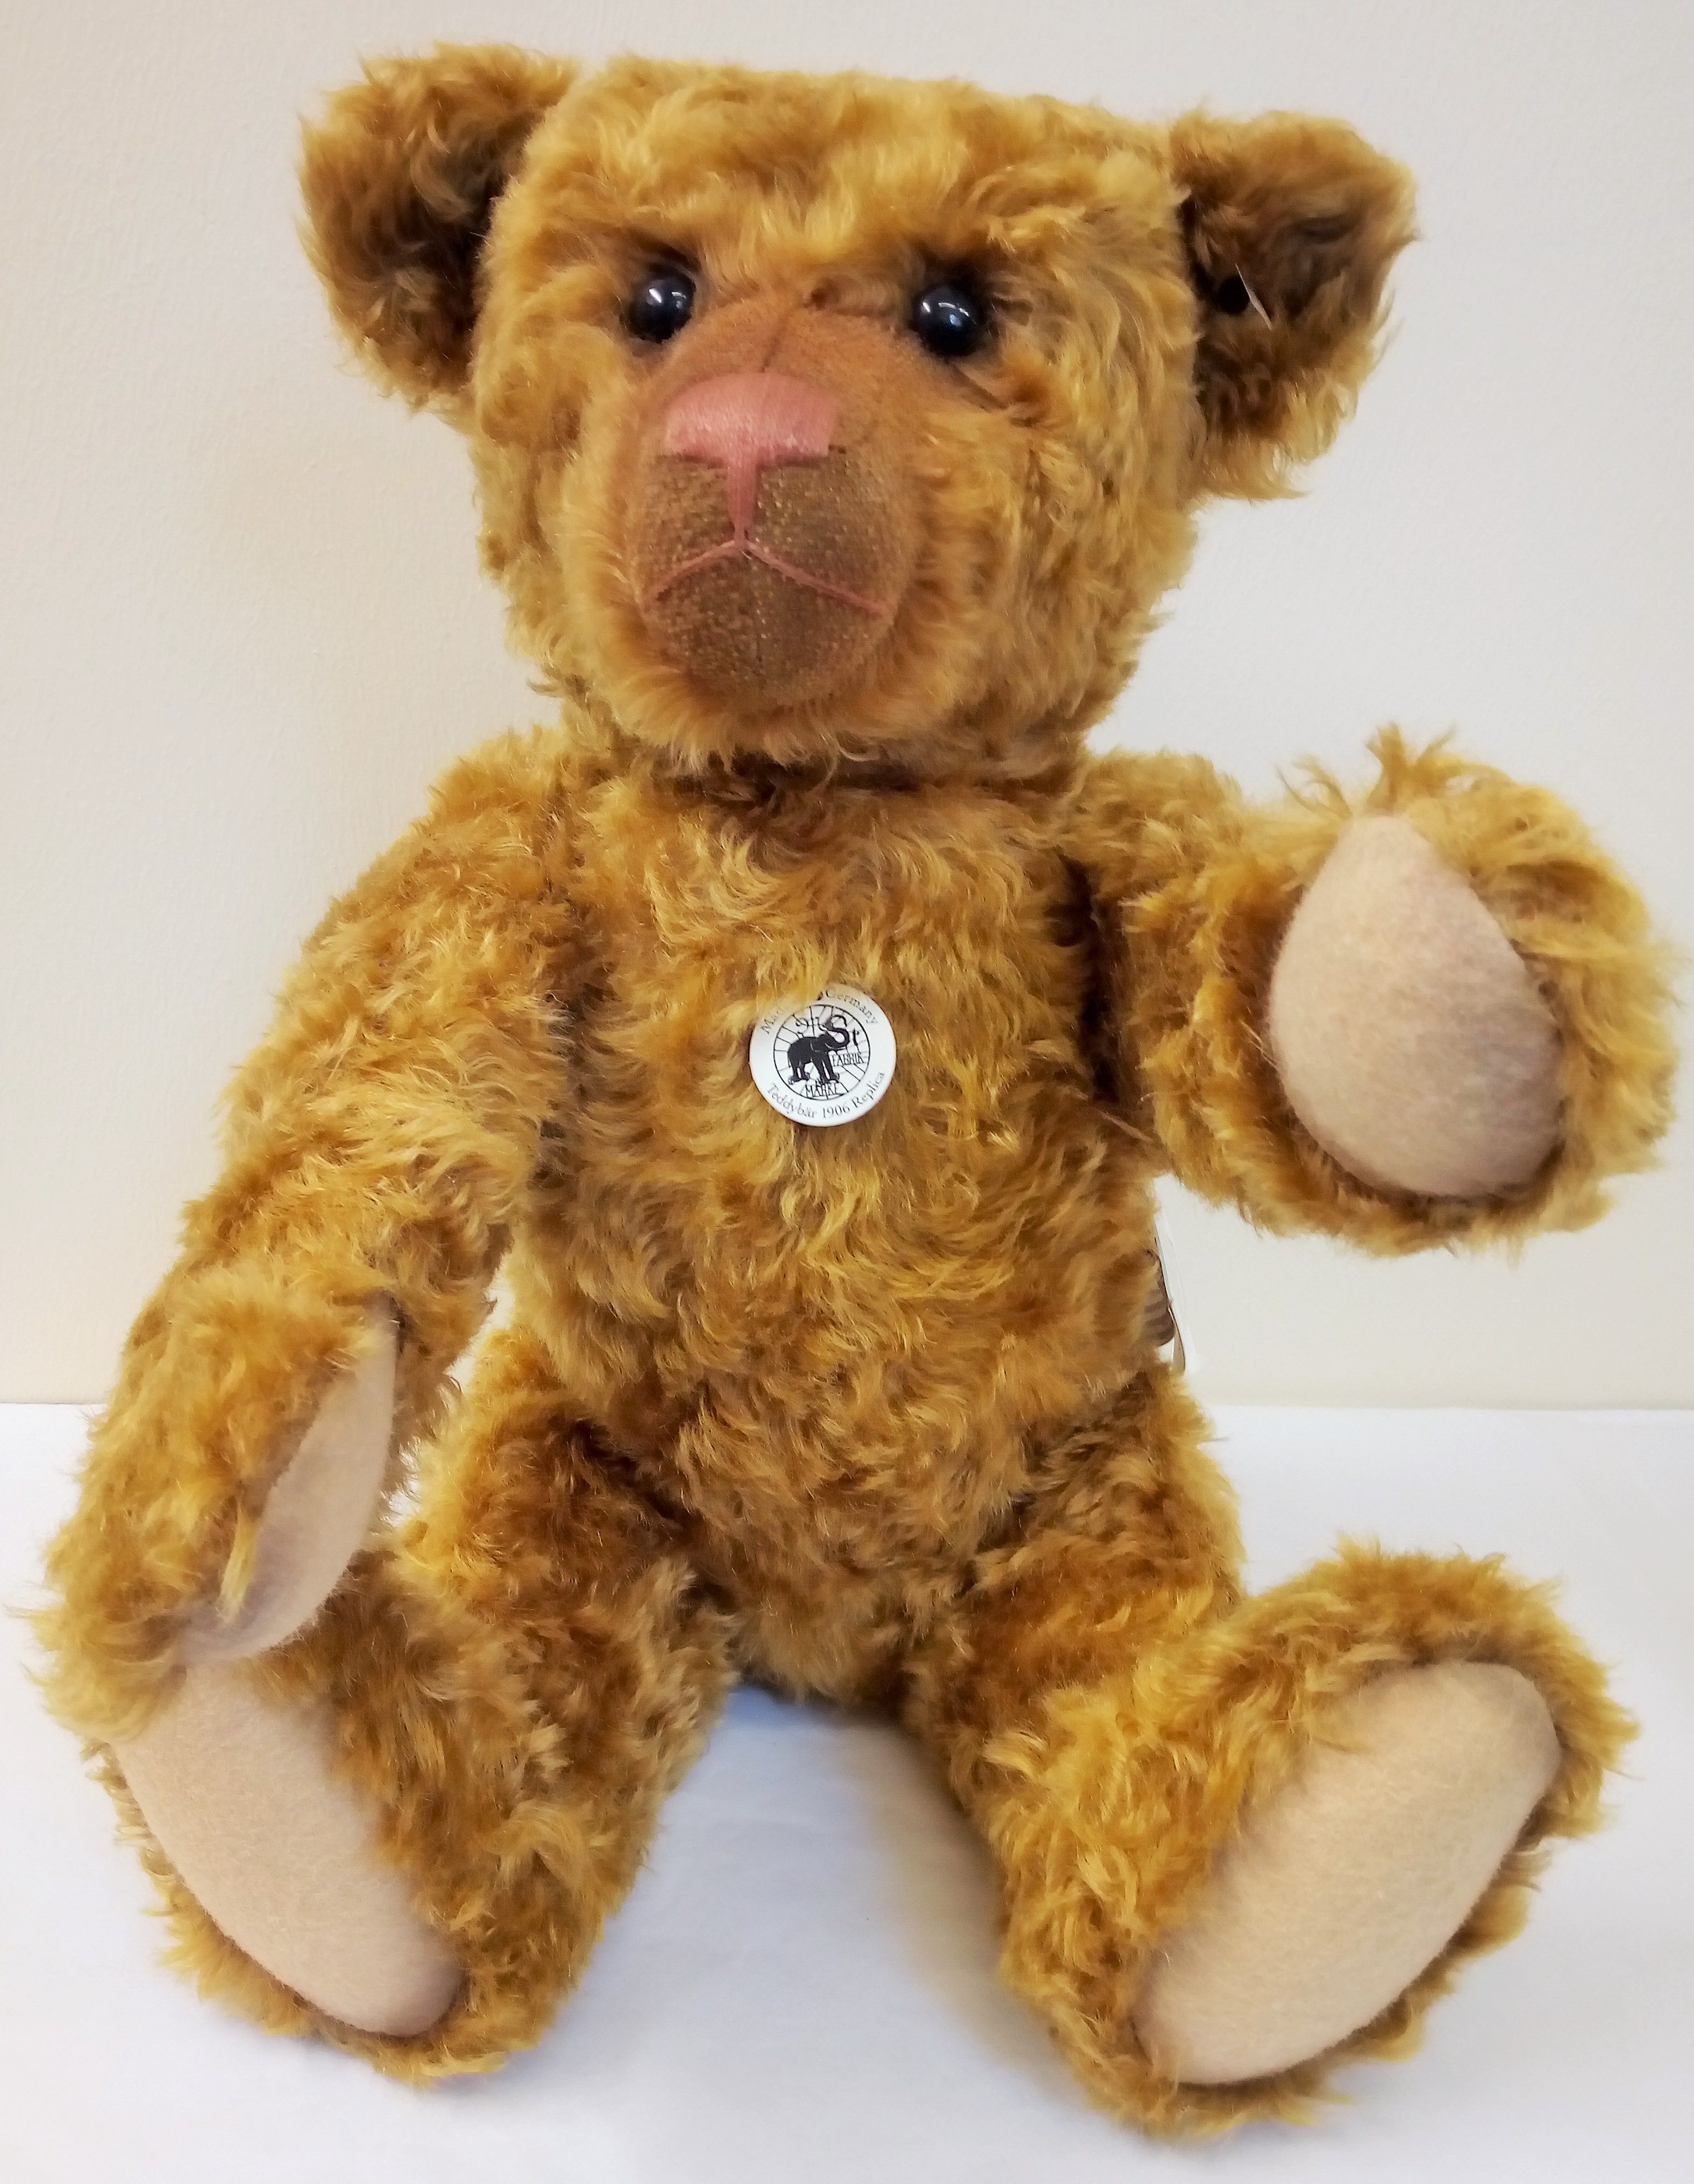 Steiff Teddy Bear Replica 1906 Light Brown Mohair 50cm 403385